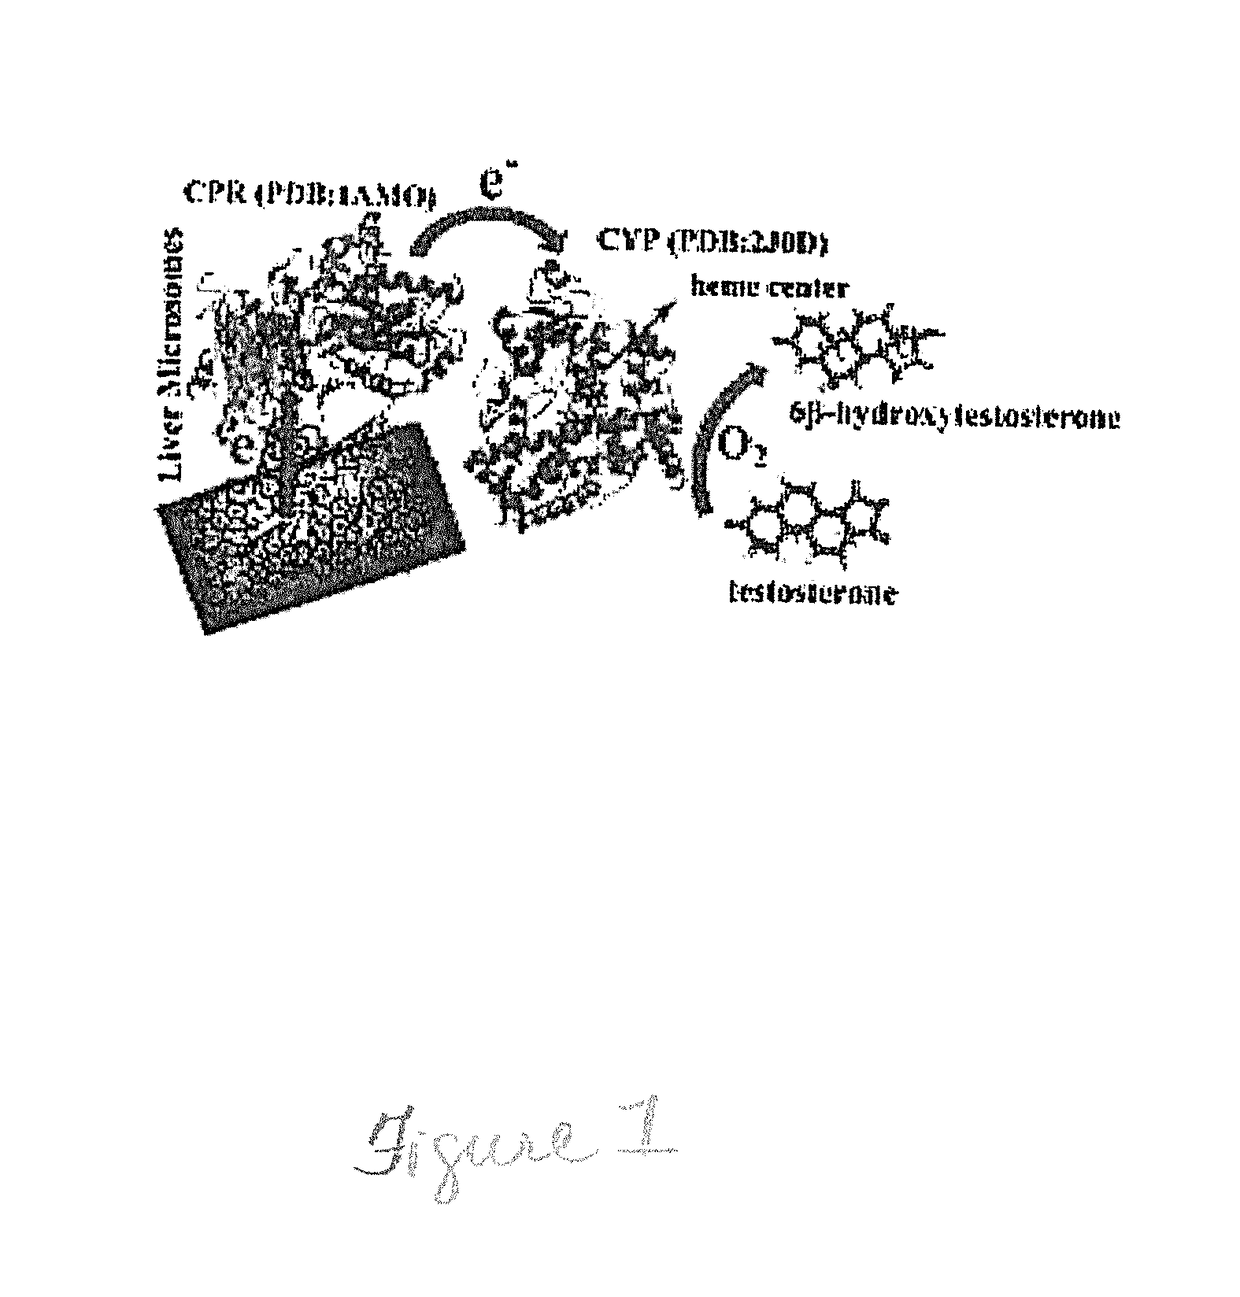 Microsomal bioreactor for synthesis of drug metabolites